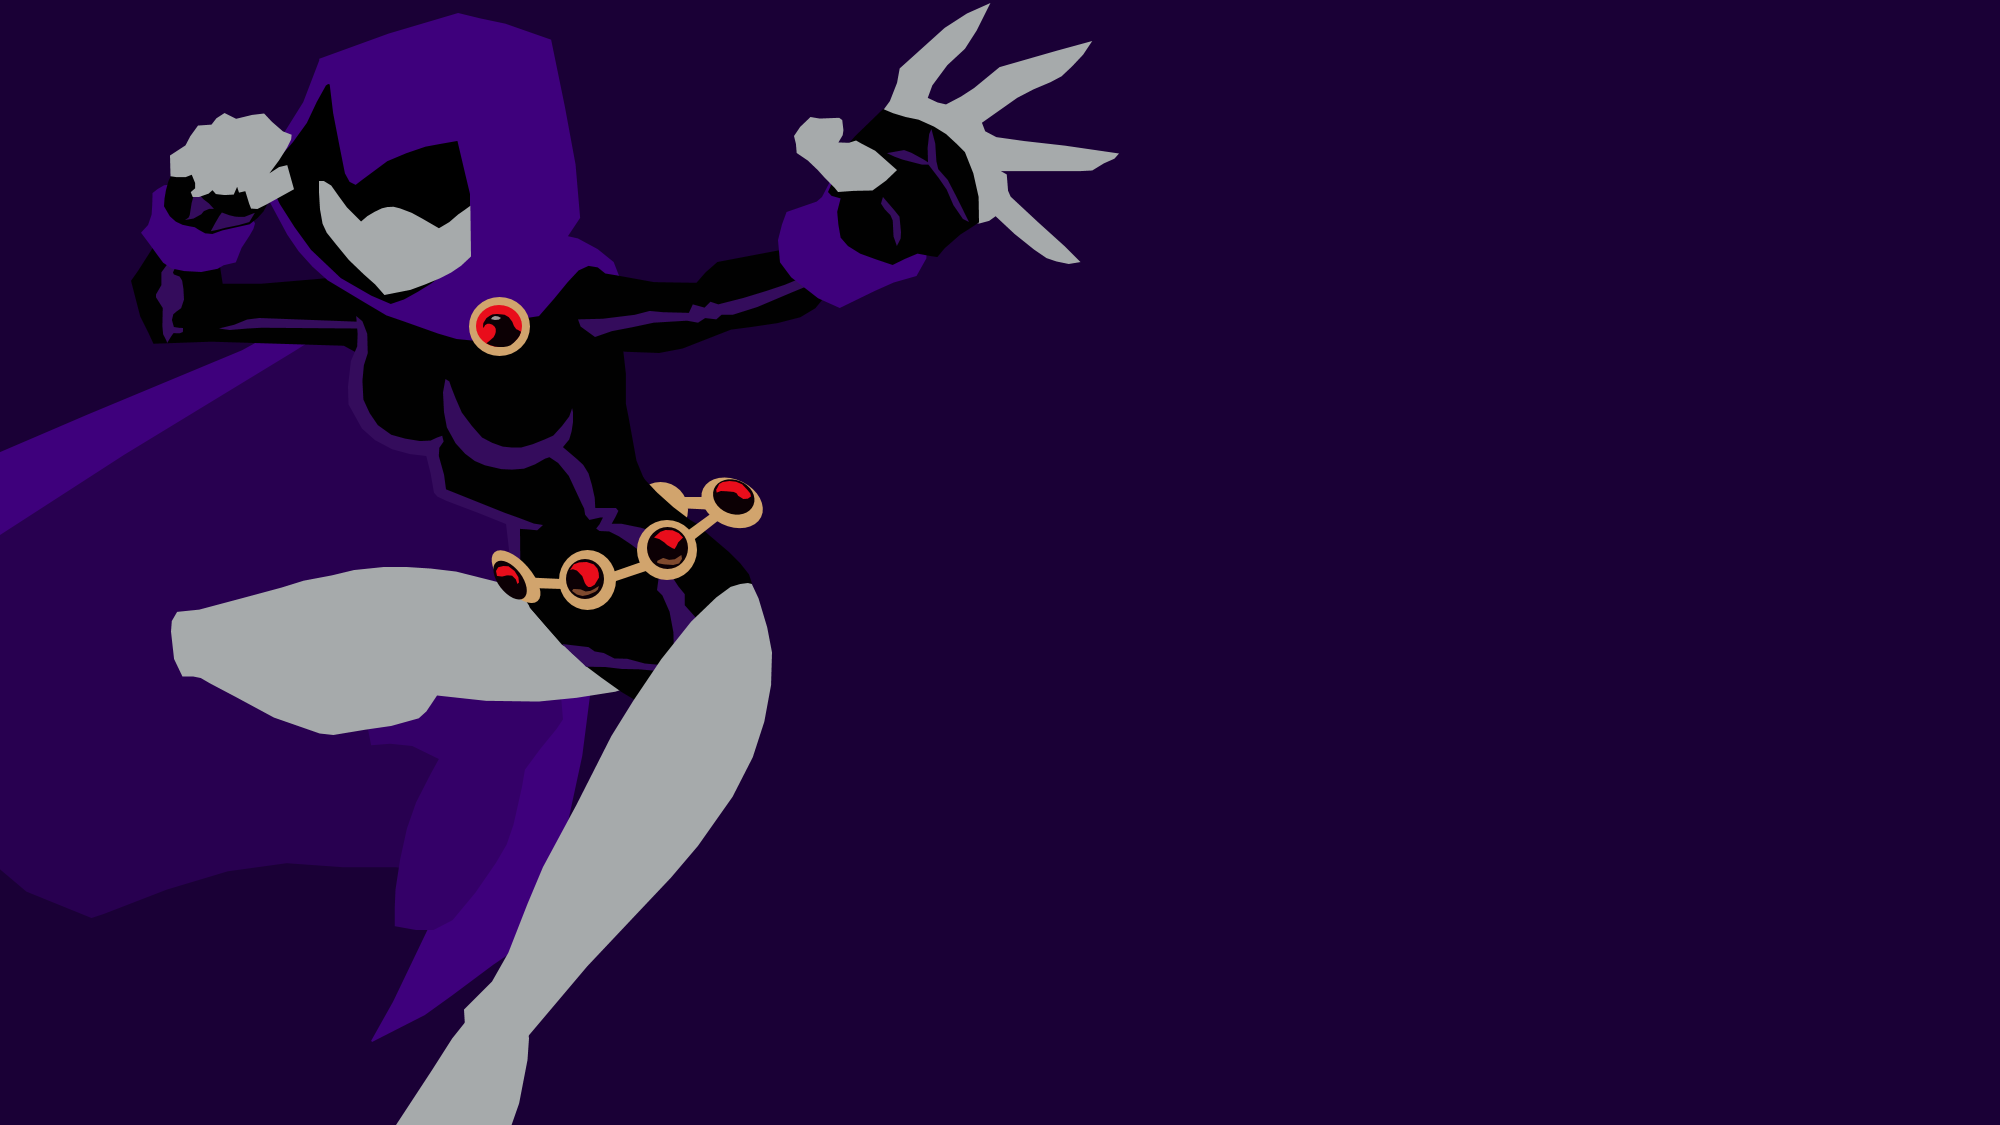 Teen Titans, Raven (character), copy space, representation